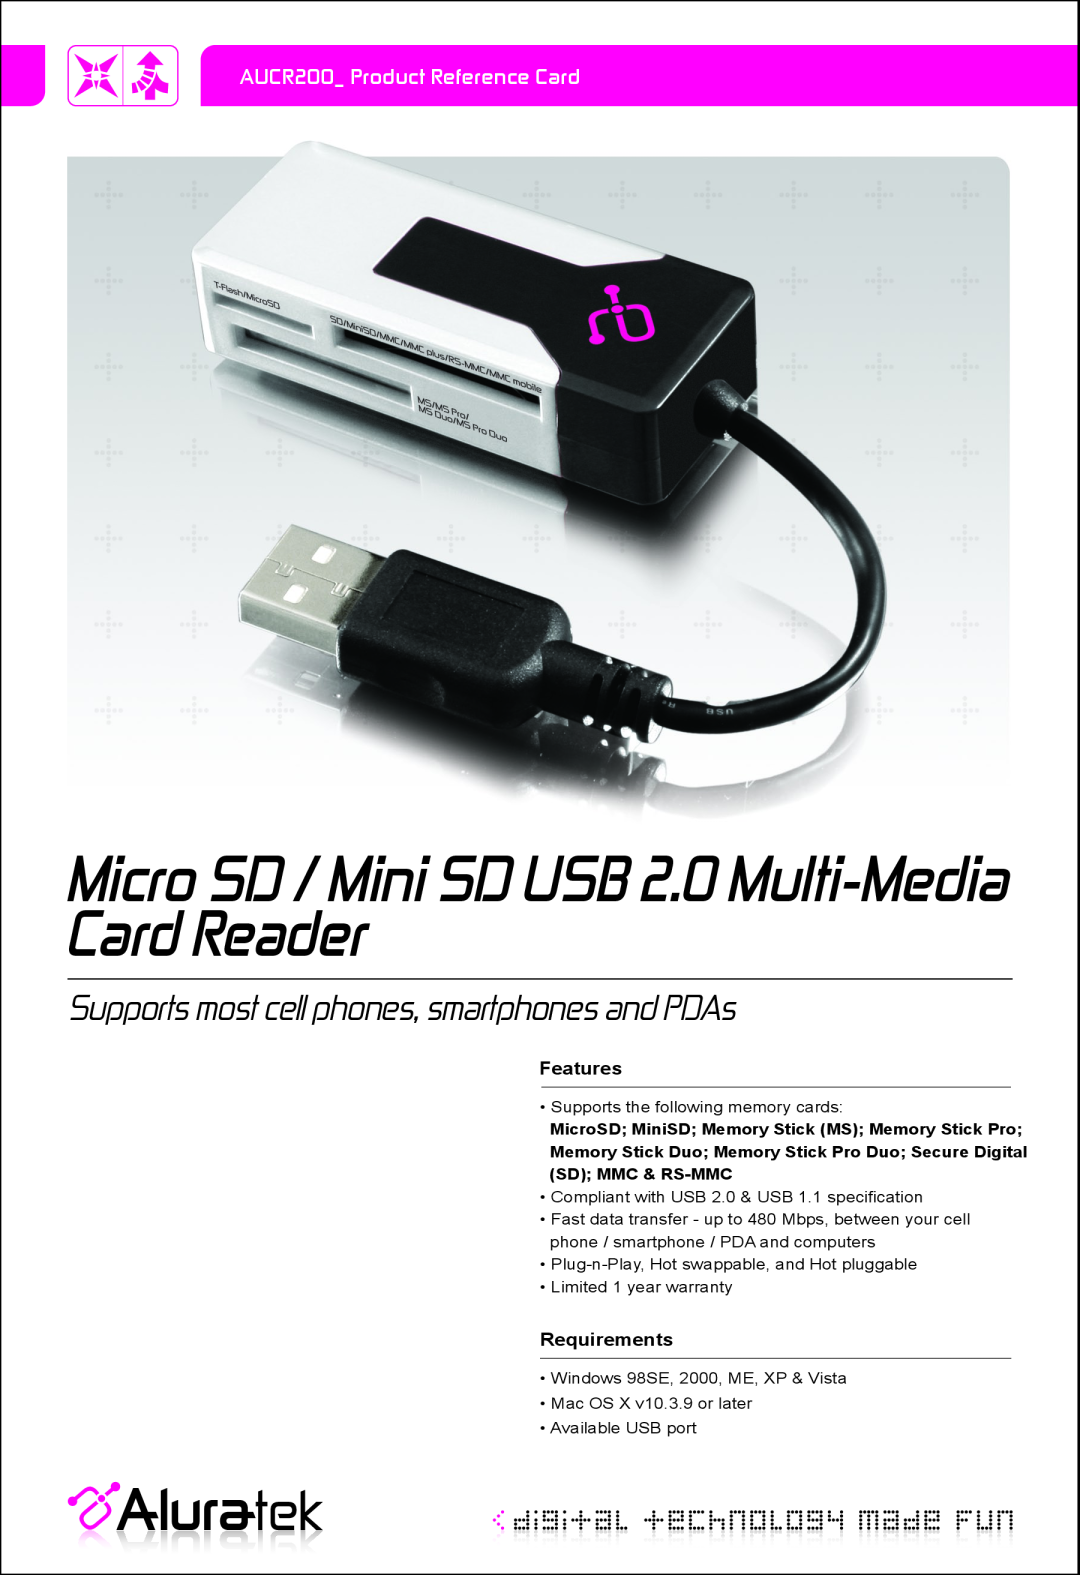 Aluratek AUCR200 warranty Micro SD / Mini SD USB 2.0 Multi-Media Card Reader, Features, Requirements 